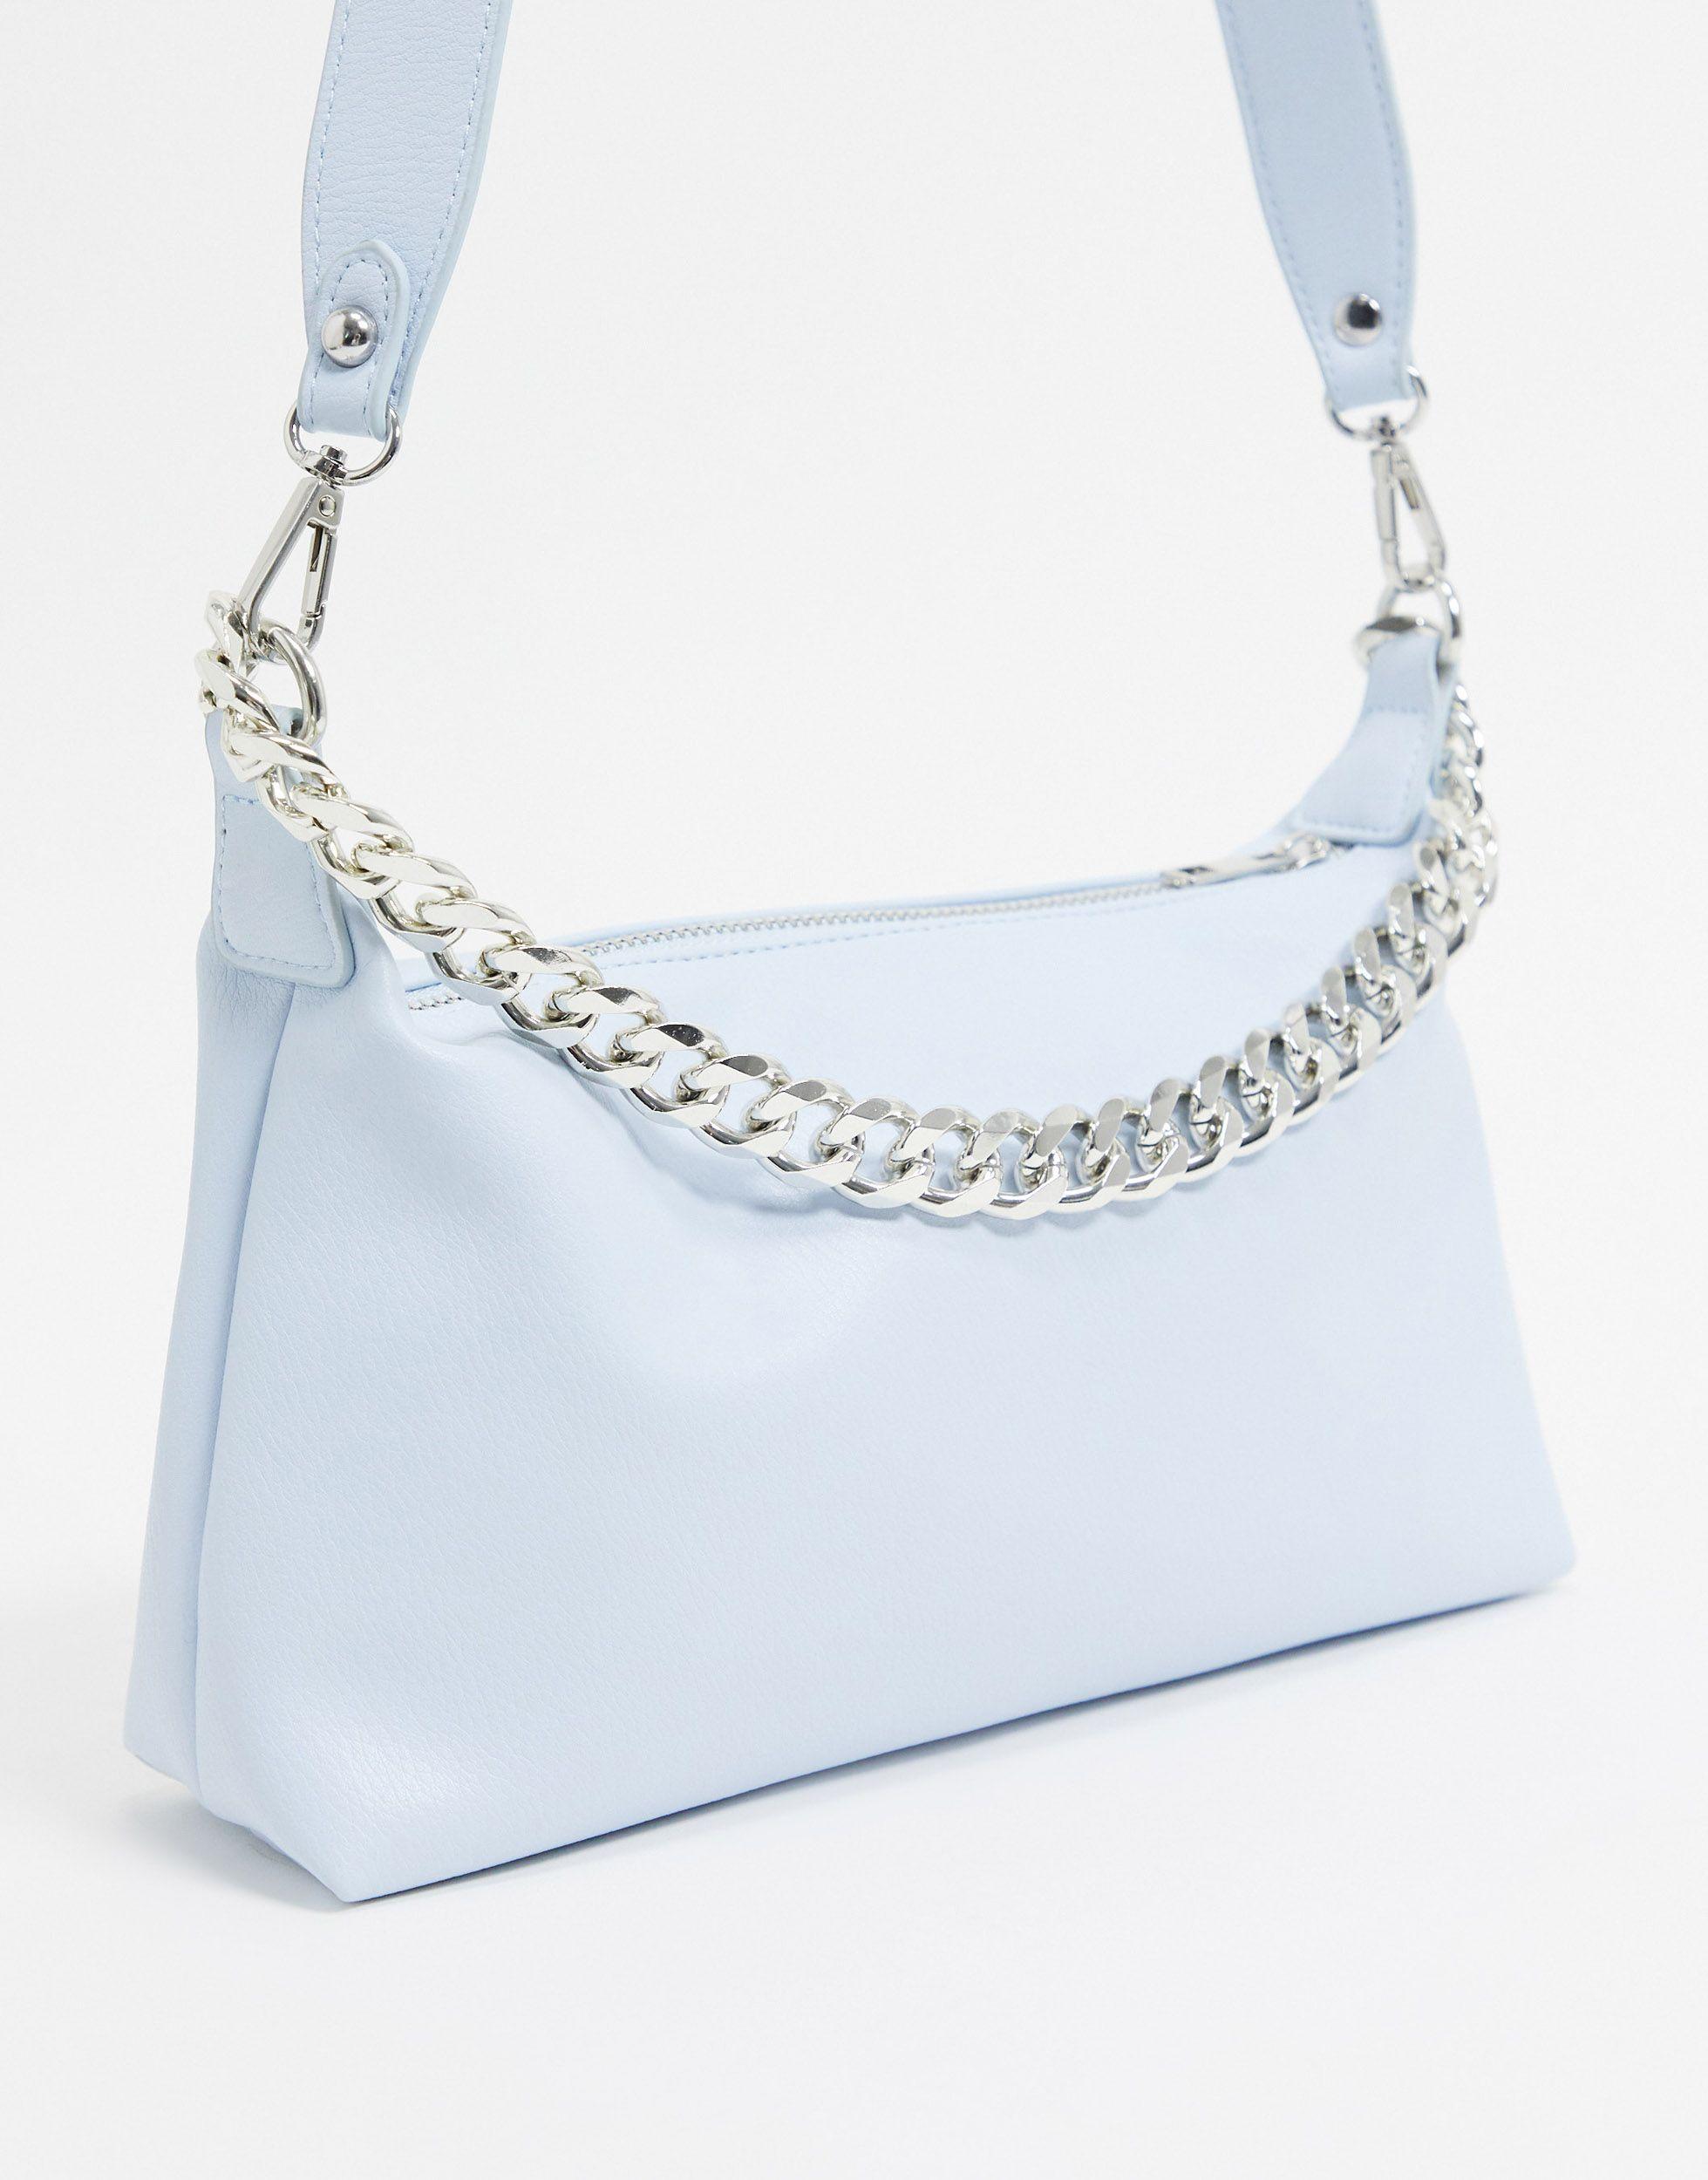 Bershka Synthetic Chain Detail Bag in Blue - Lyst